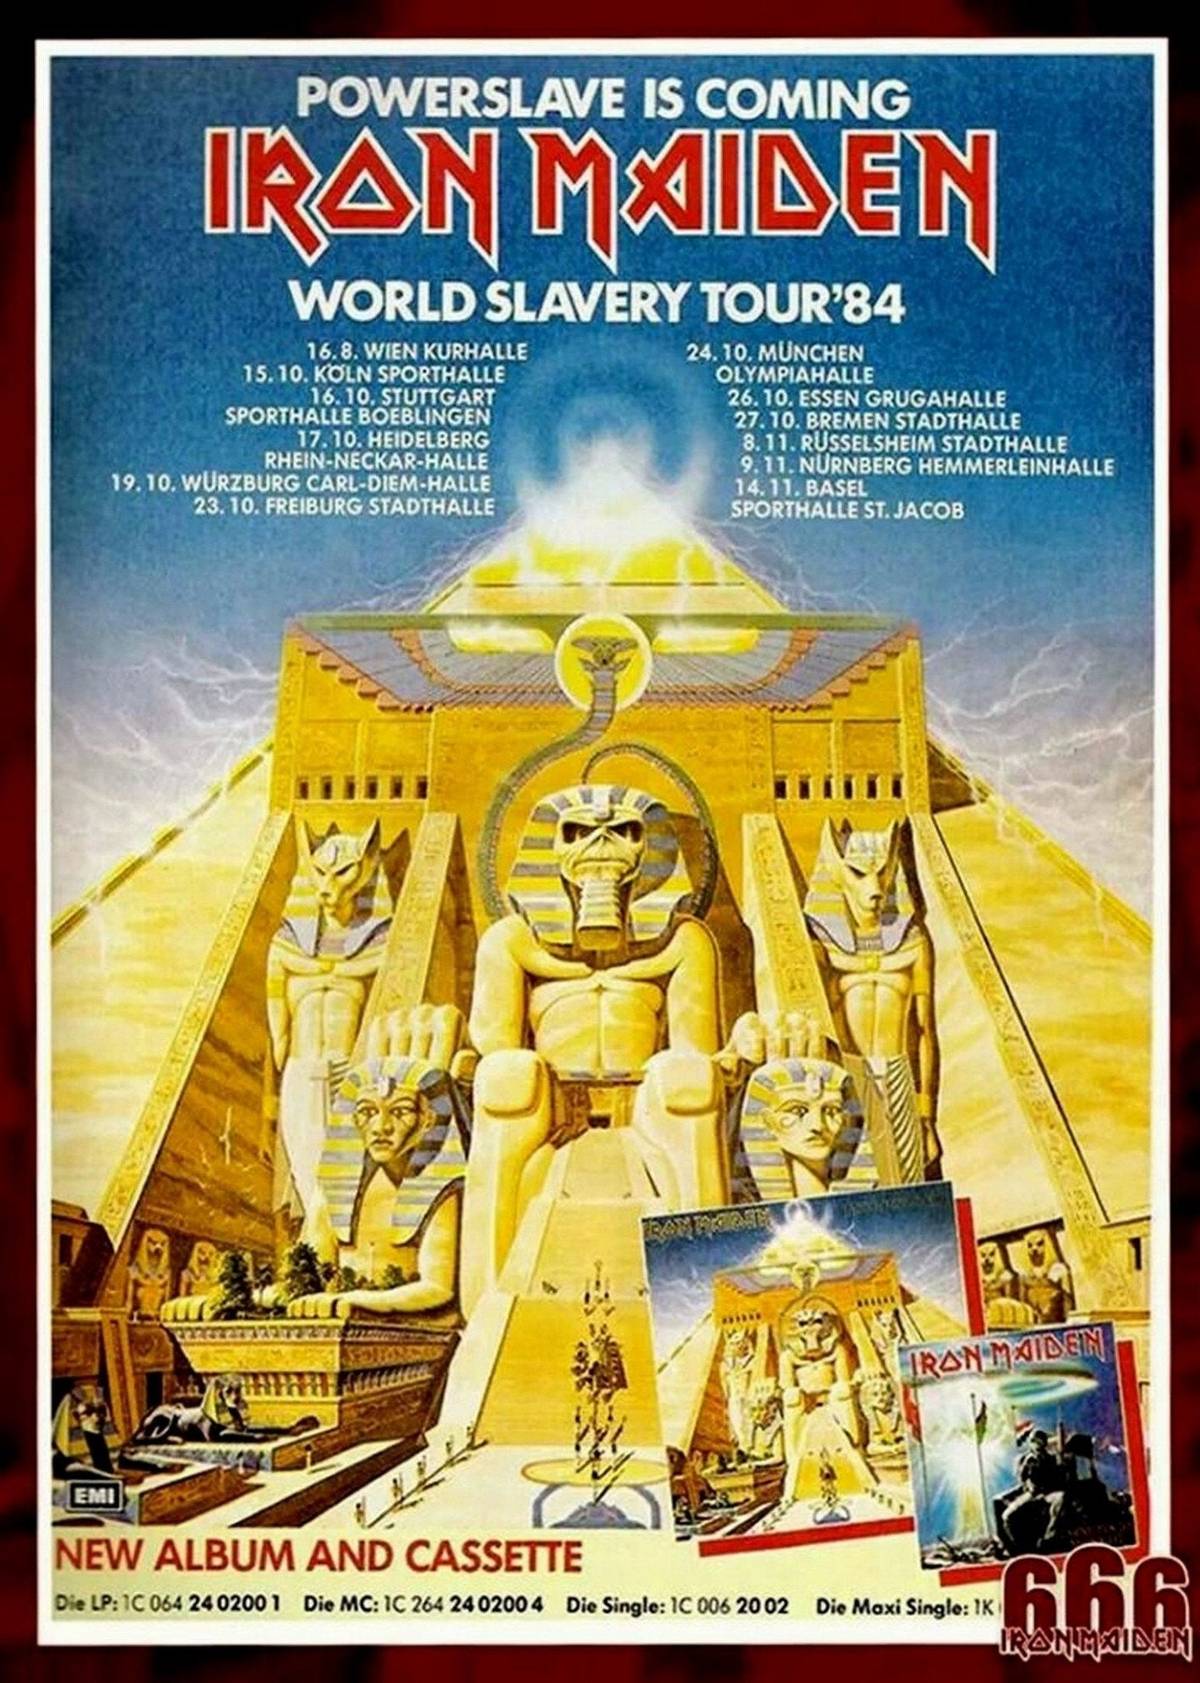 the world slavery tour